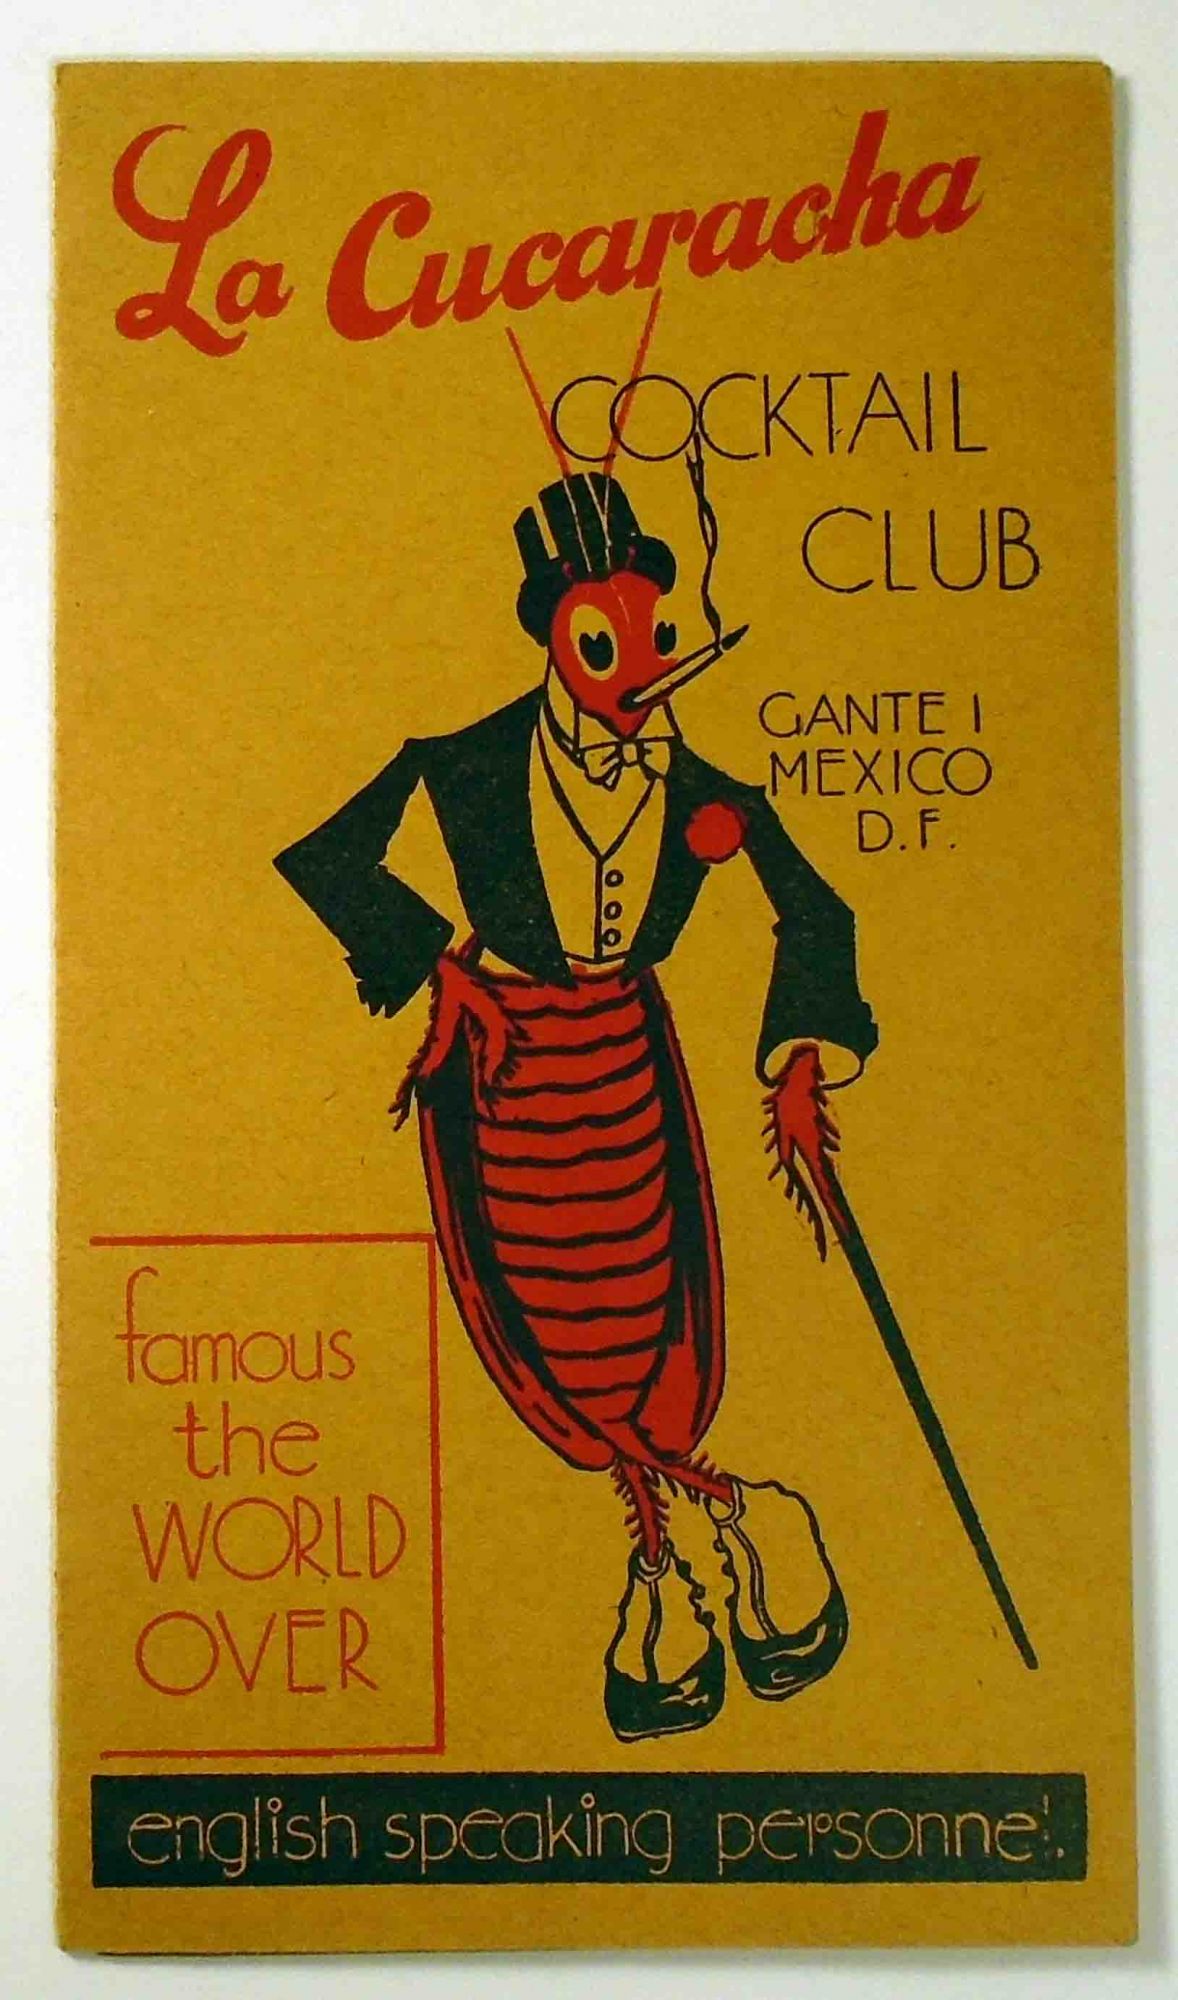 La Cucaracha Cocktail Club. Famous the World Over. English